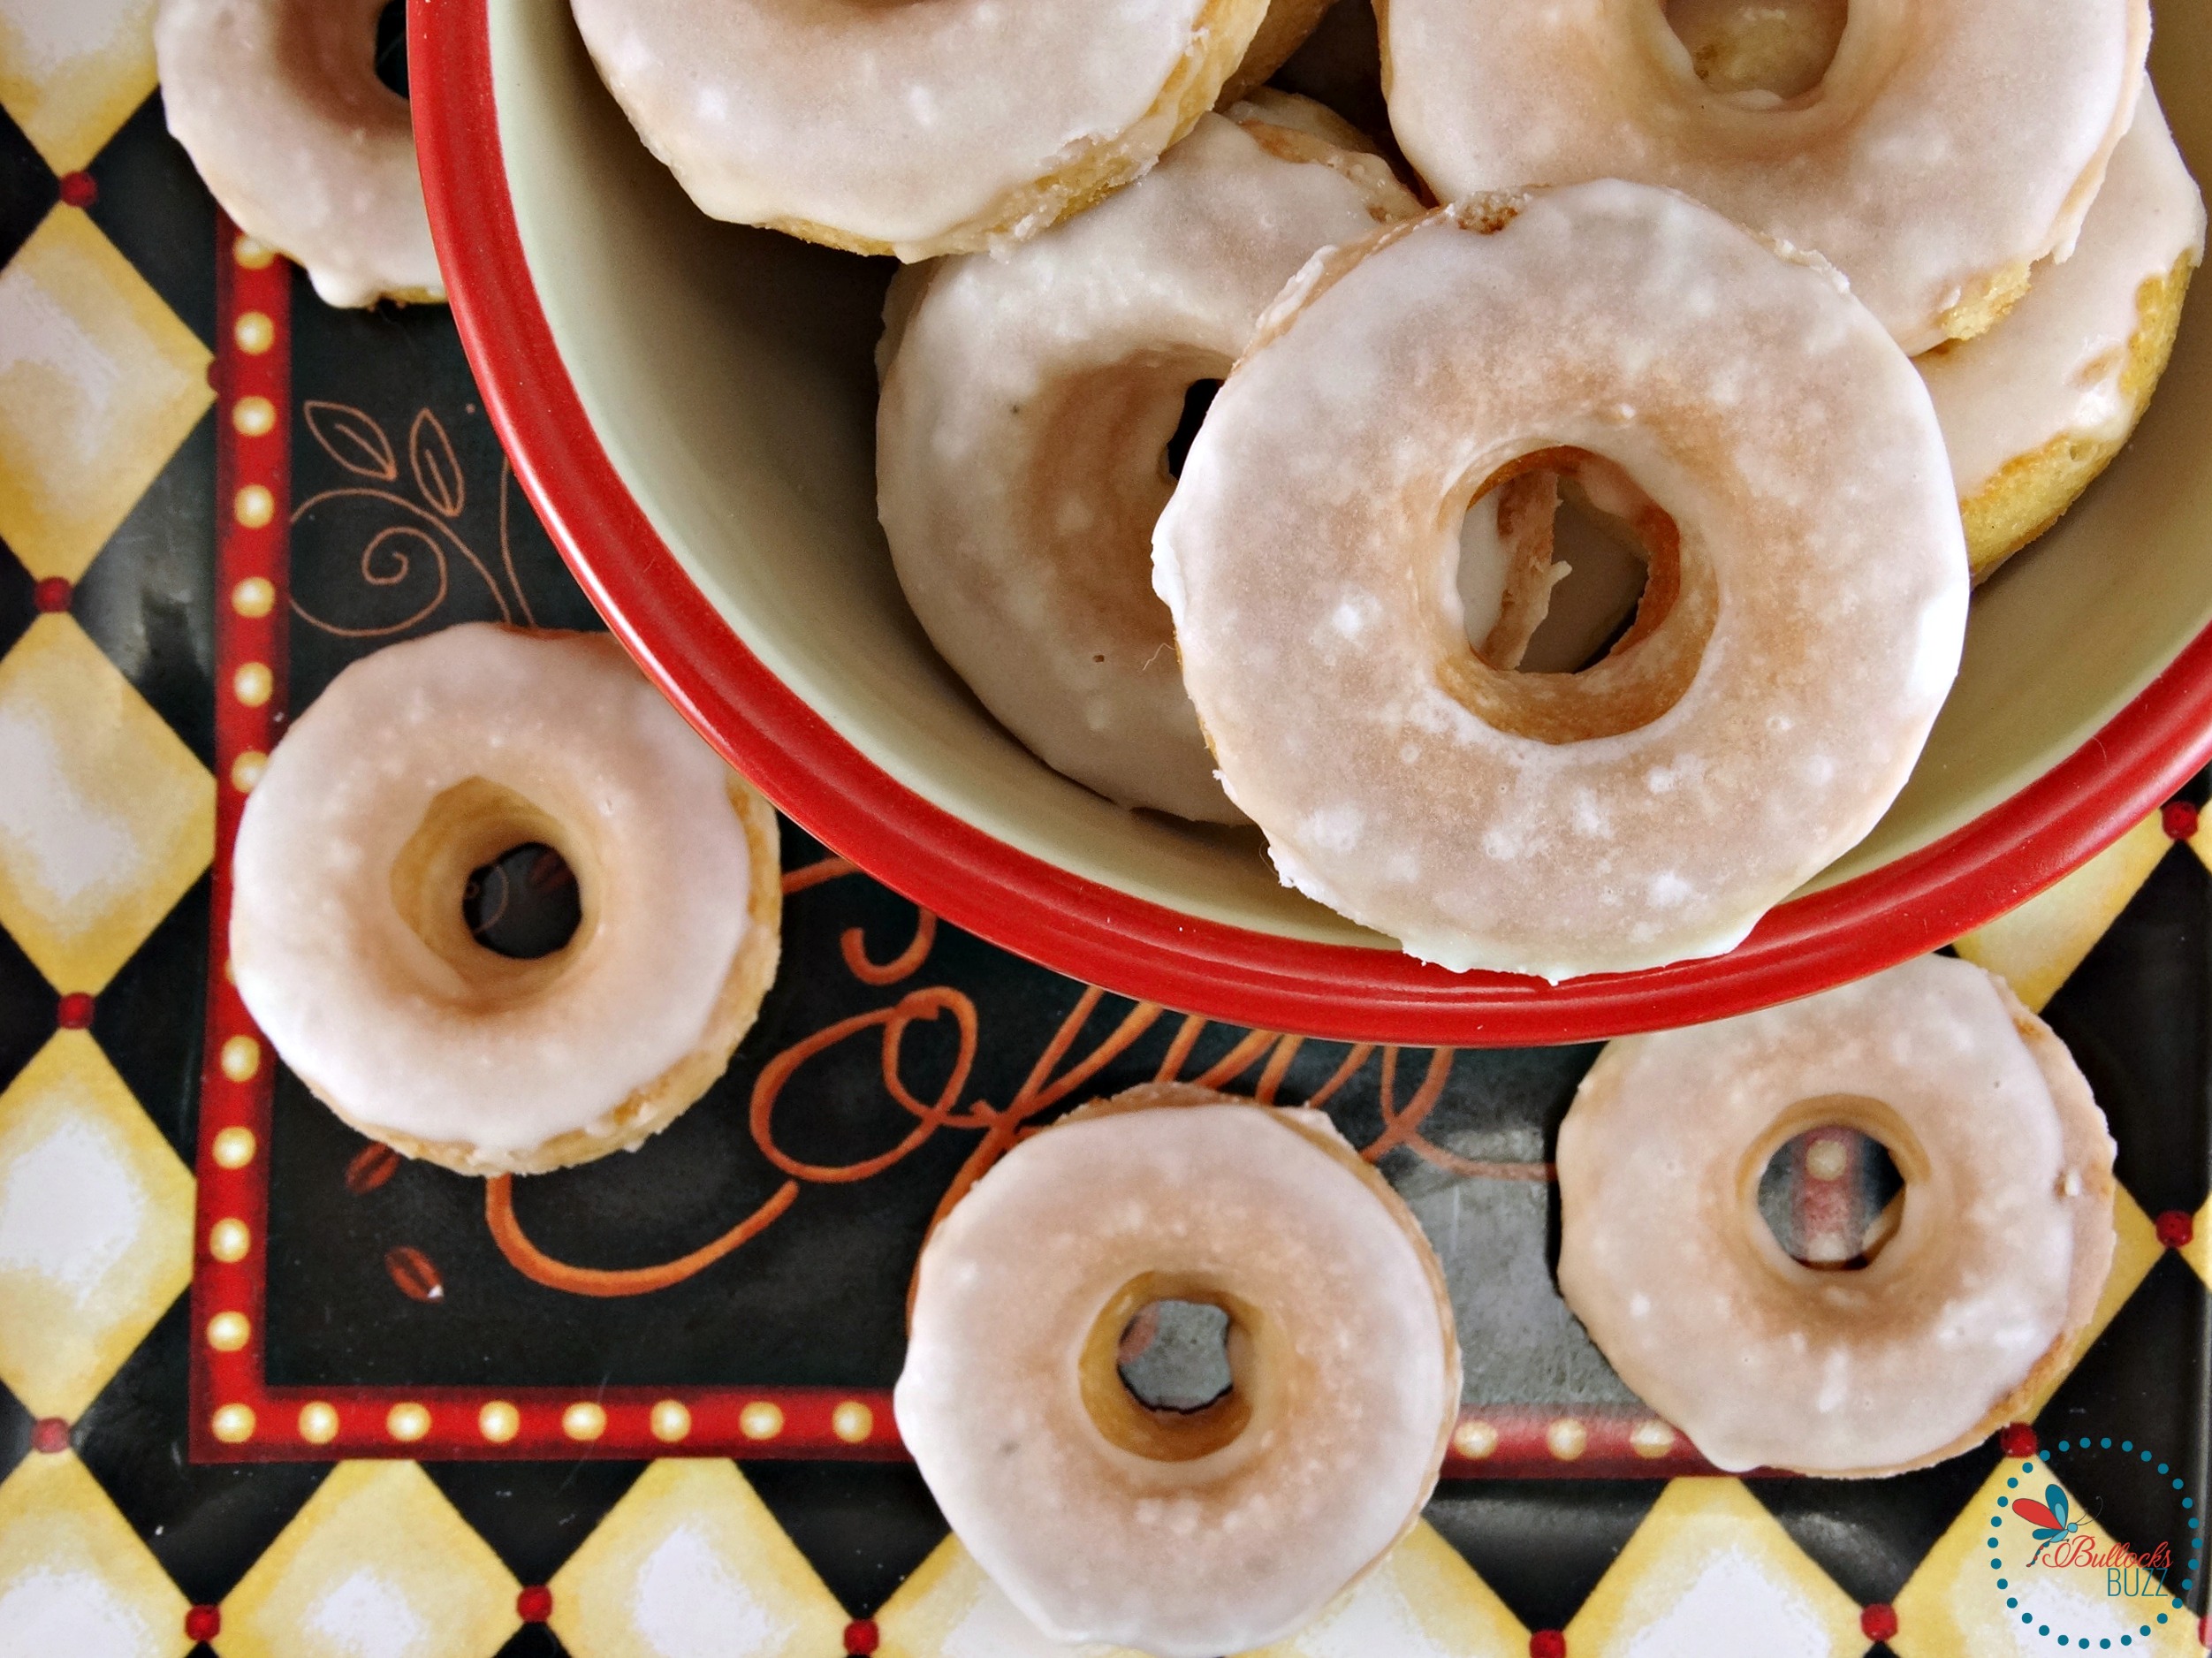 Mini Baked Donuts with Caramel Glaze image 1